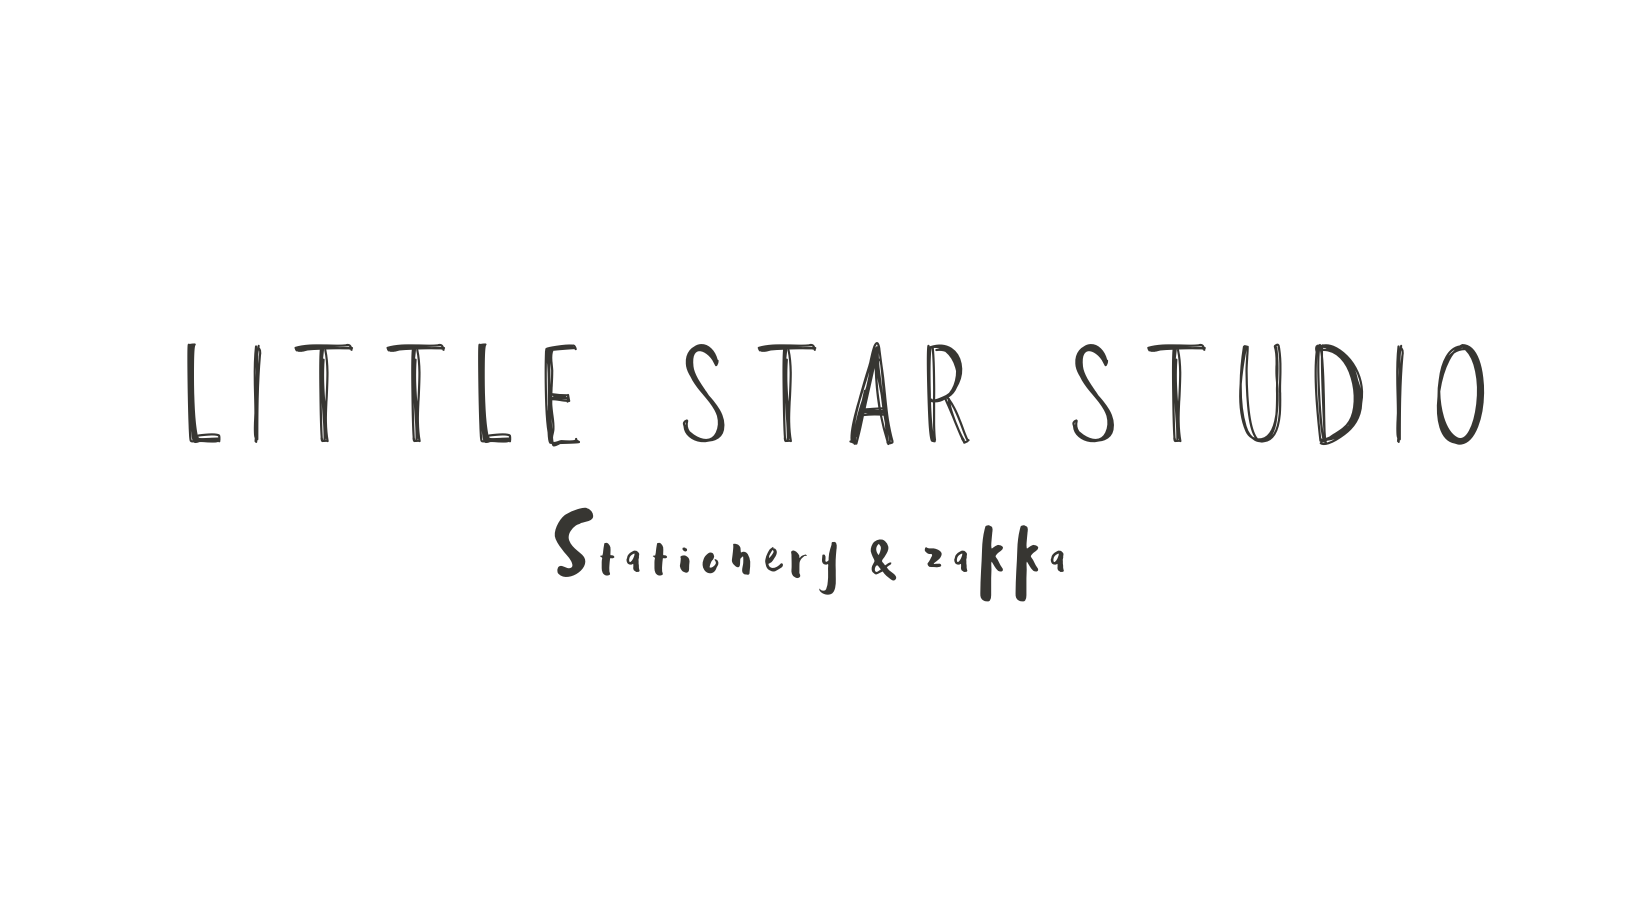 Little Star Studio 星點文具室